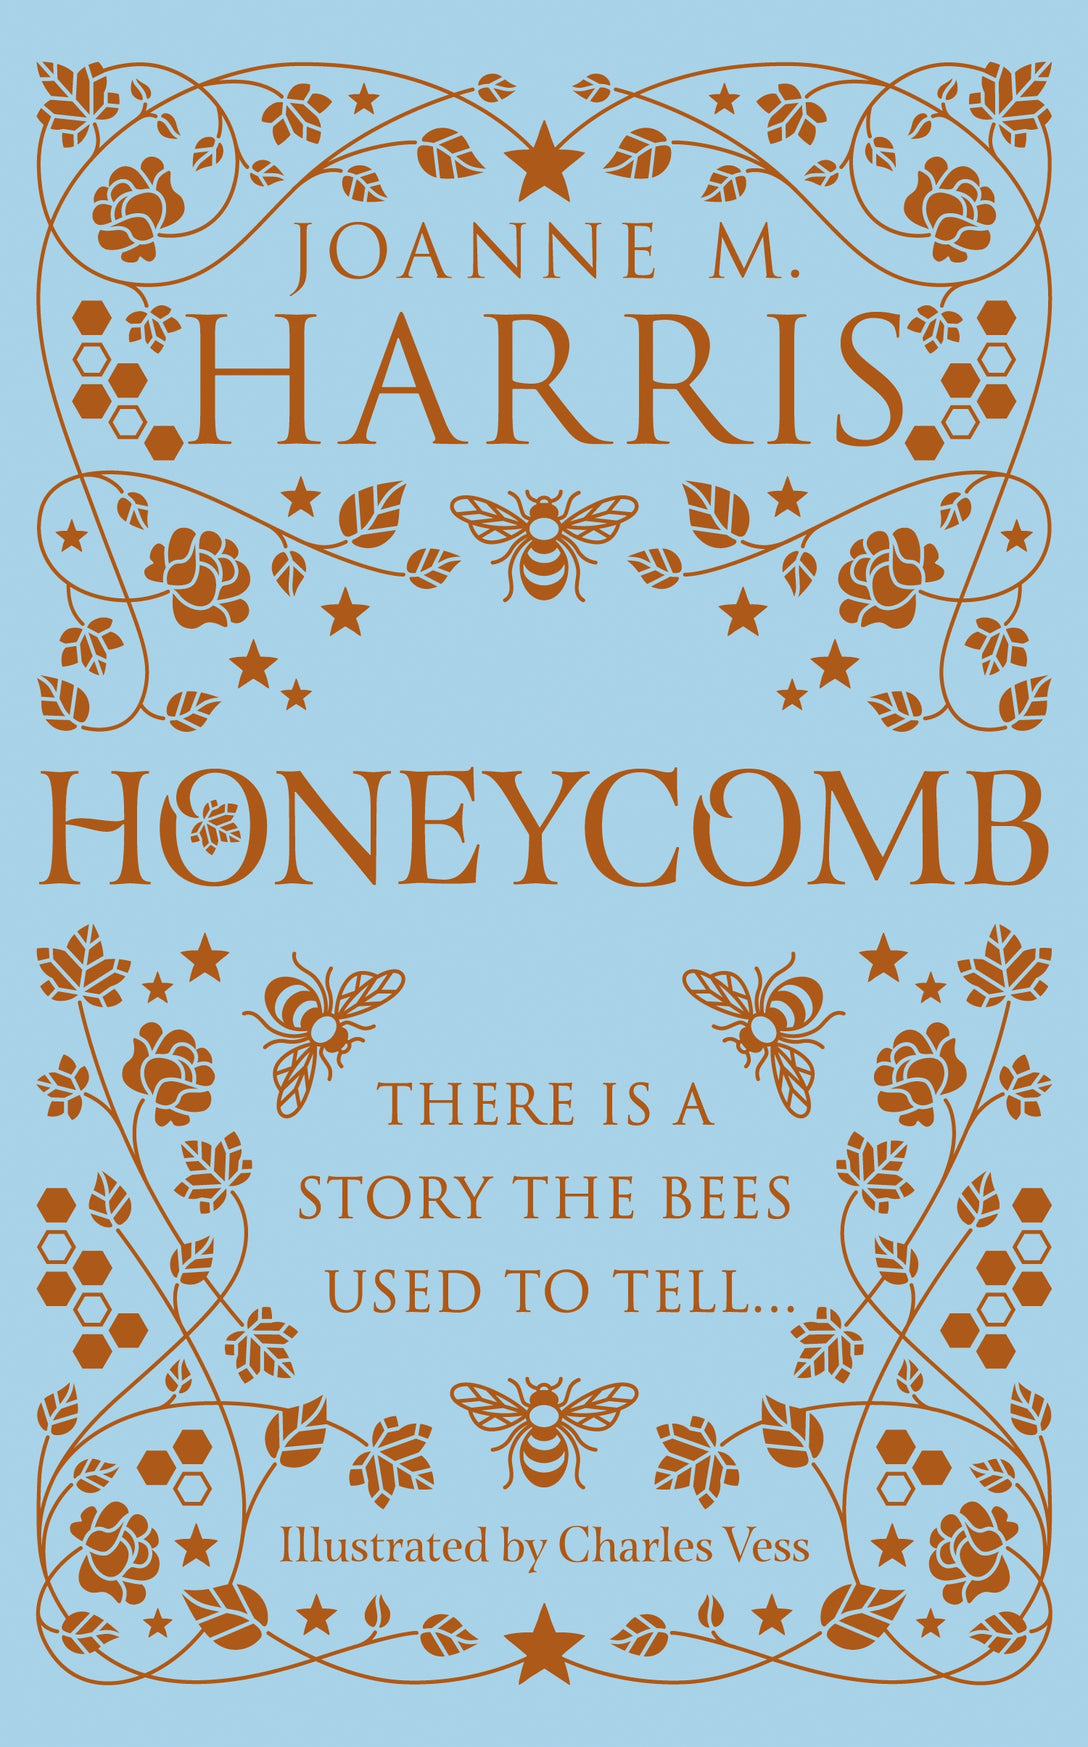 Honeycomb by Charles Vess, Joanne Harris